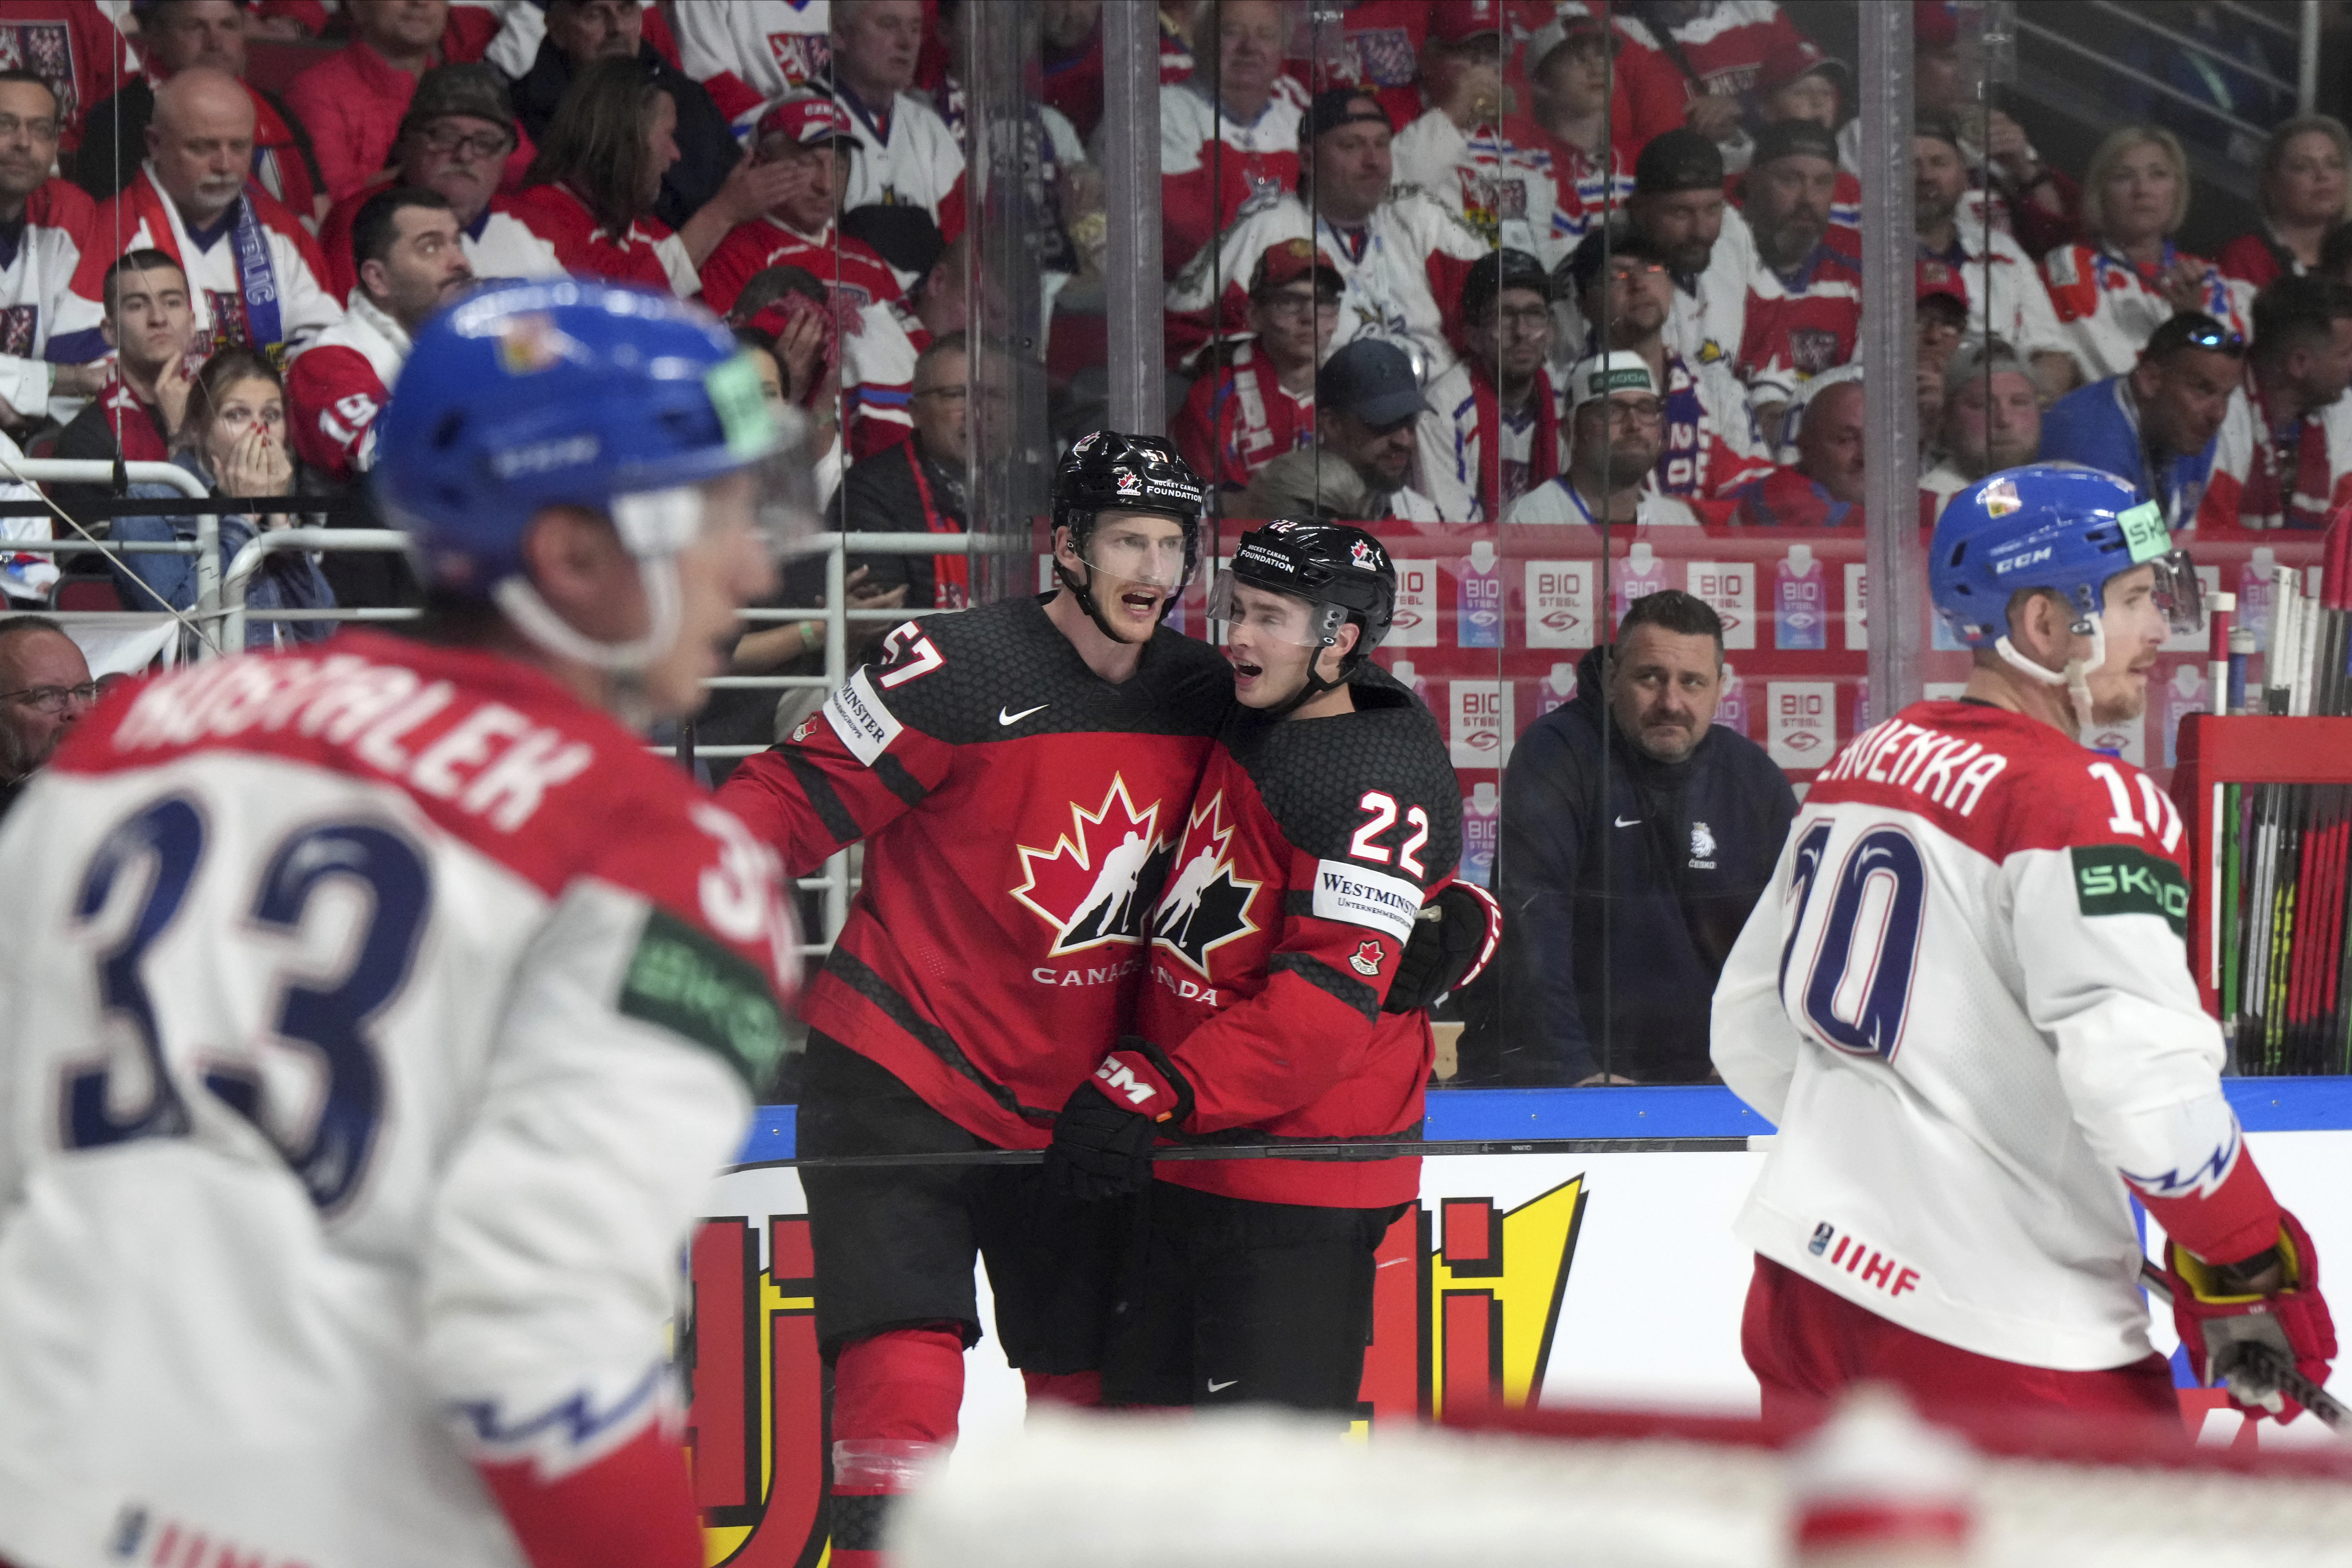 IIHF - Czechs win first in OT